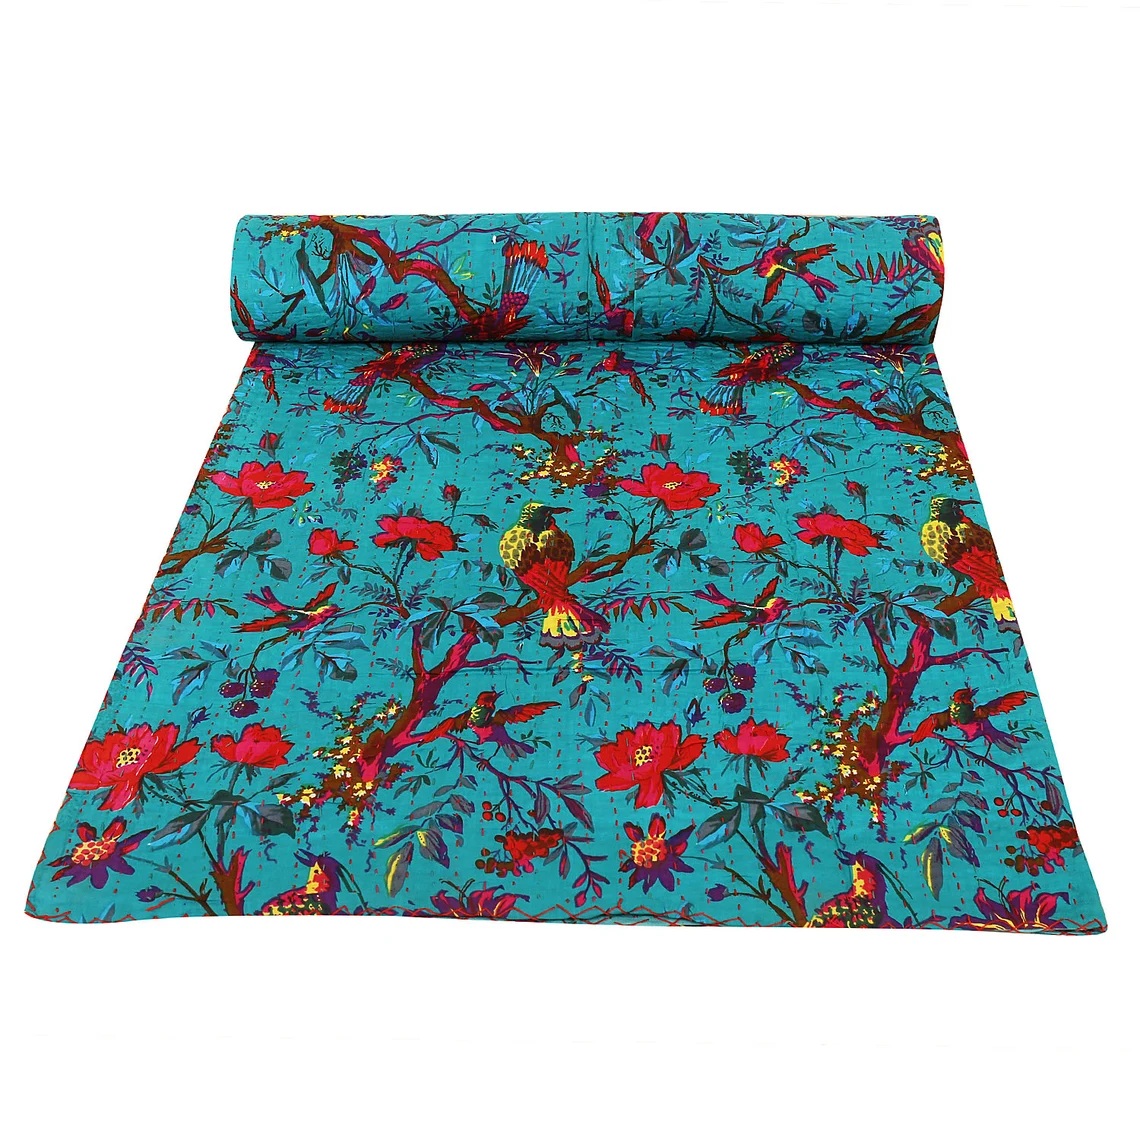 Sophia-Art Indian Cotton Kantha Quilt Indigo Blue Bohemian Floral Bedding Bedspread Hippie Throw Blanket Handmade Quilt